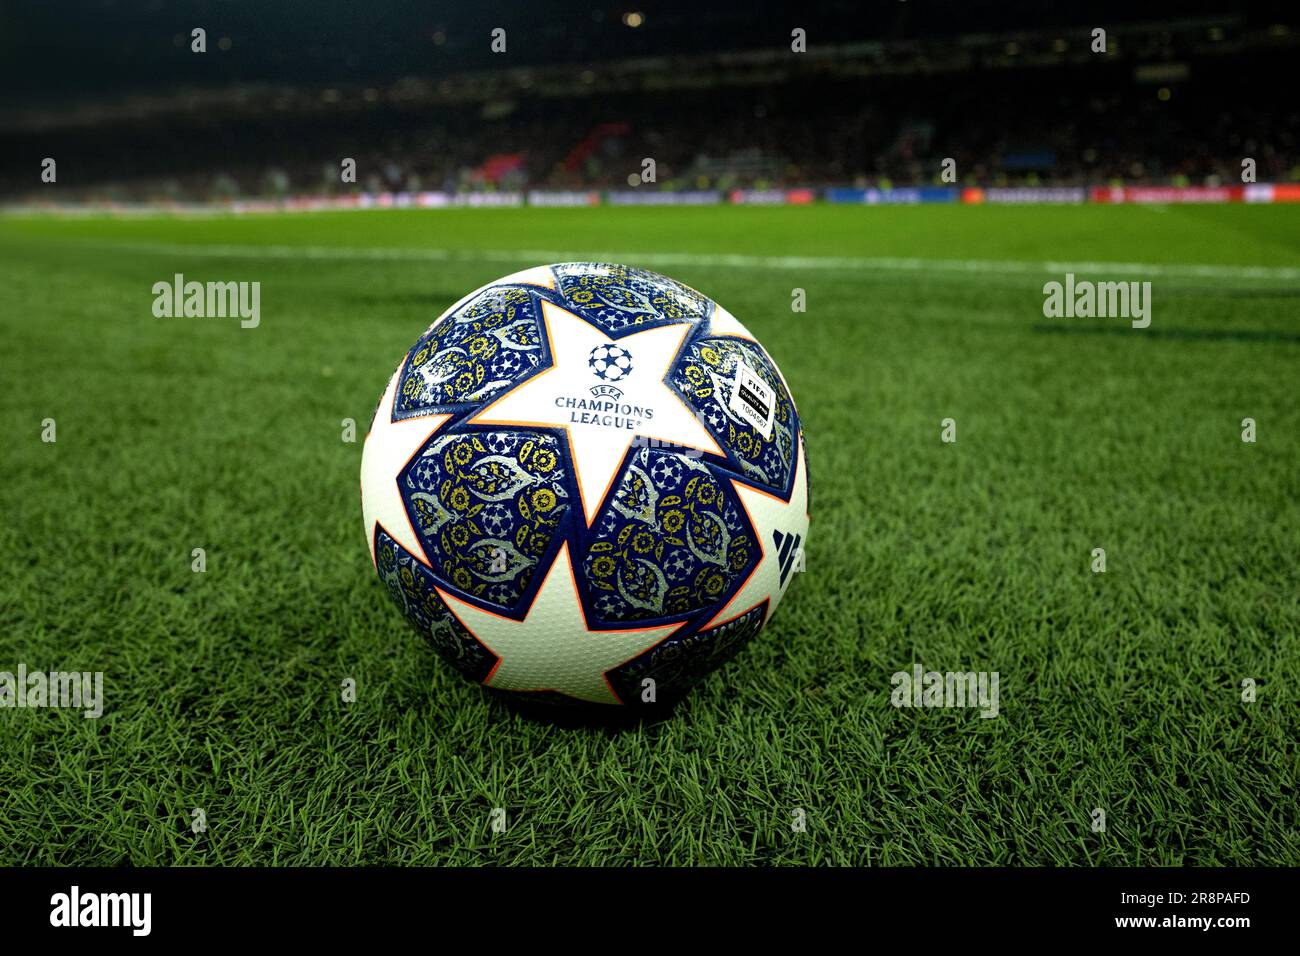 Offizieller UEFA Champions League-Ball auf dem Spielfeld Stockfoto